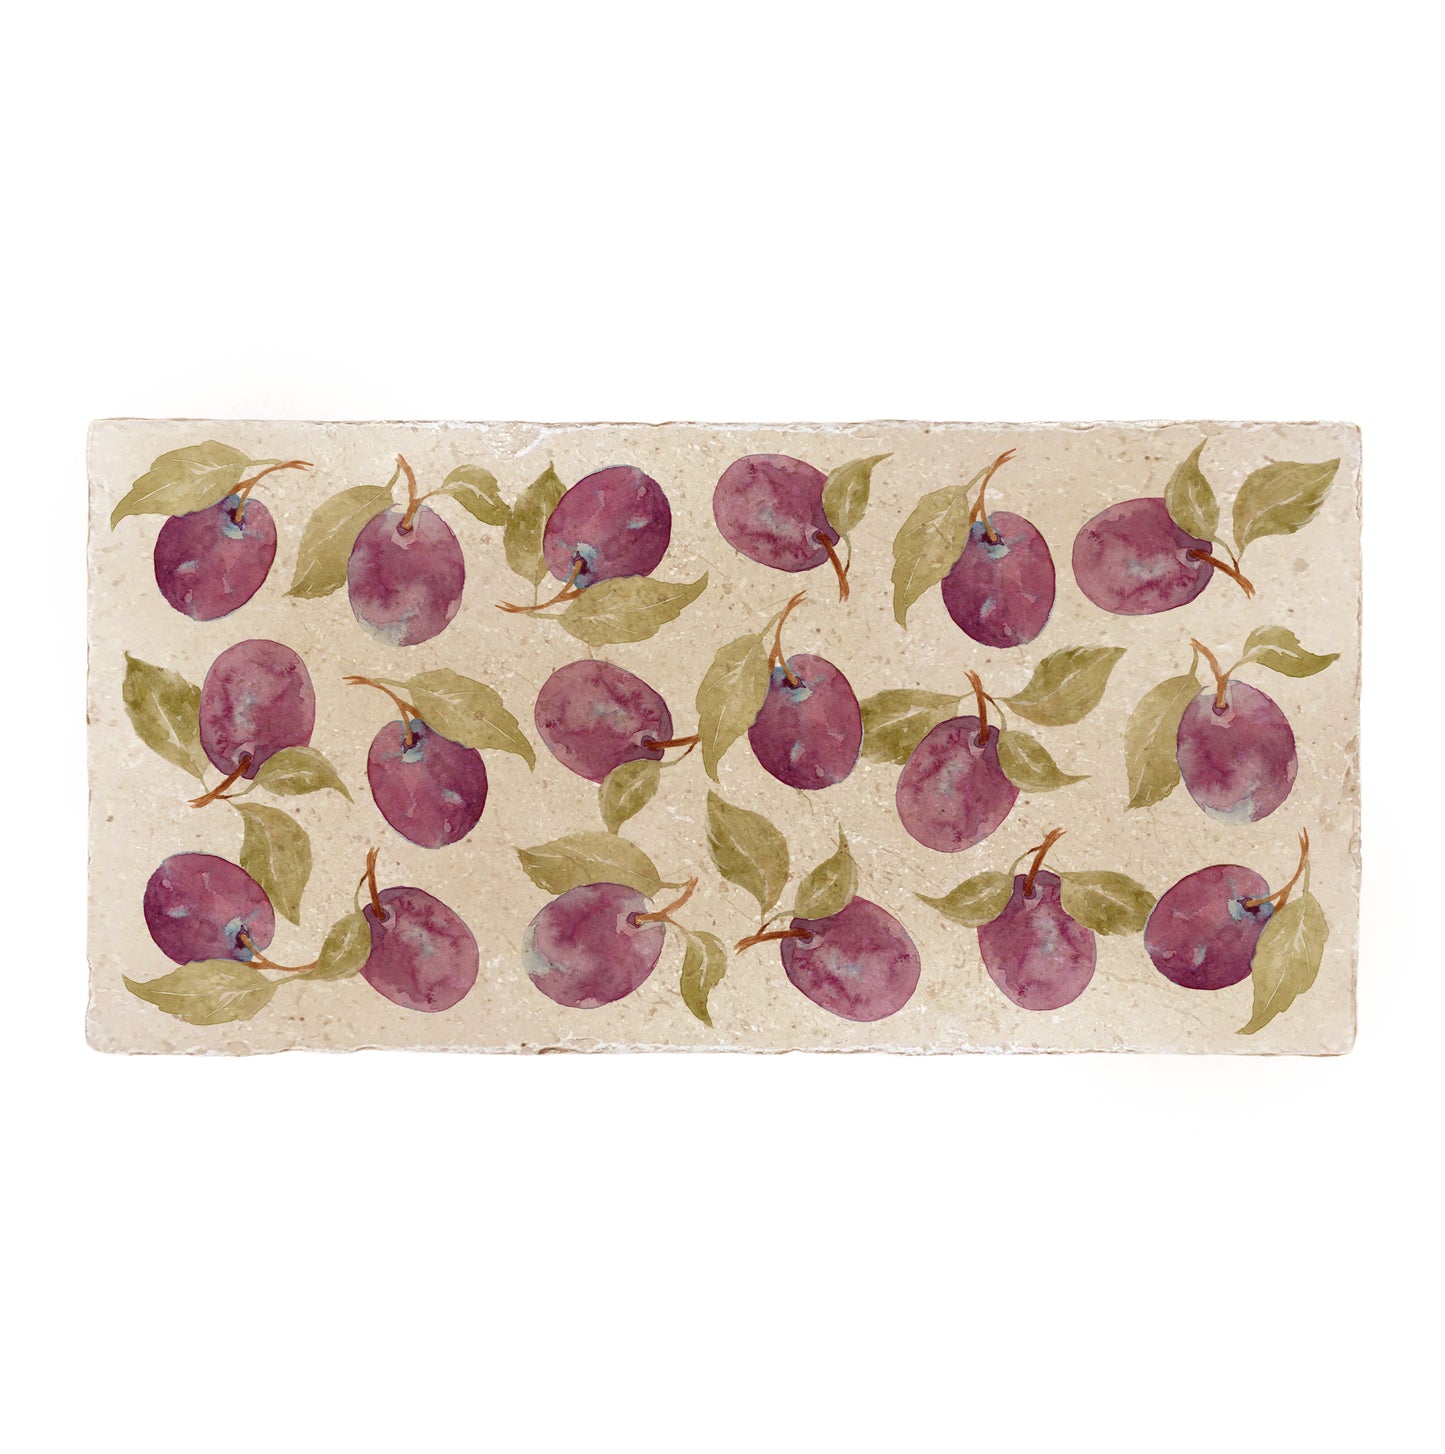 A rectangular marble sharing platter, featuring a maximalist watercolour plum pattern.